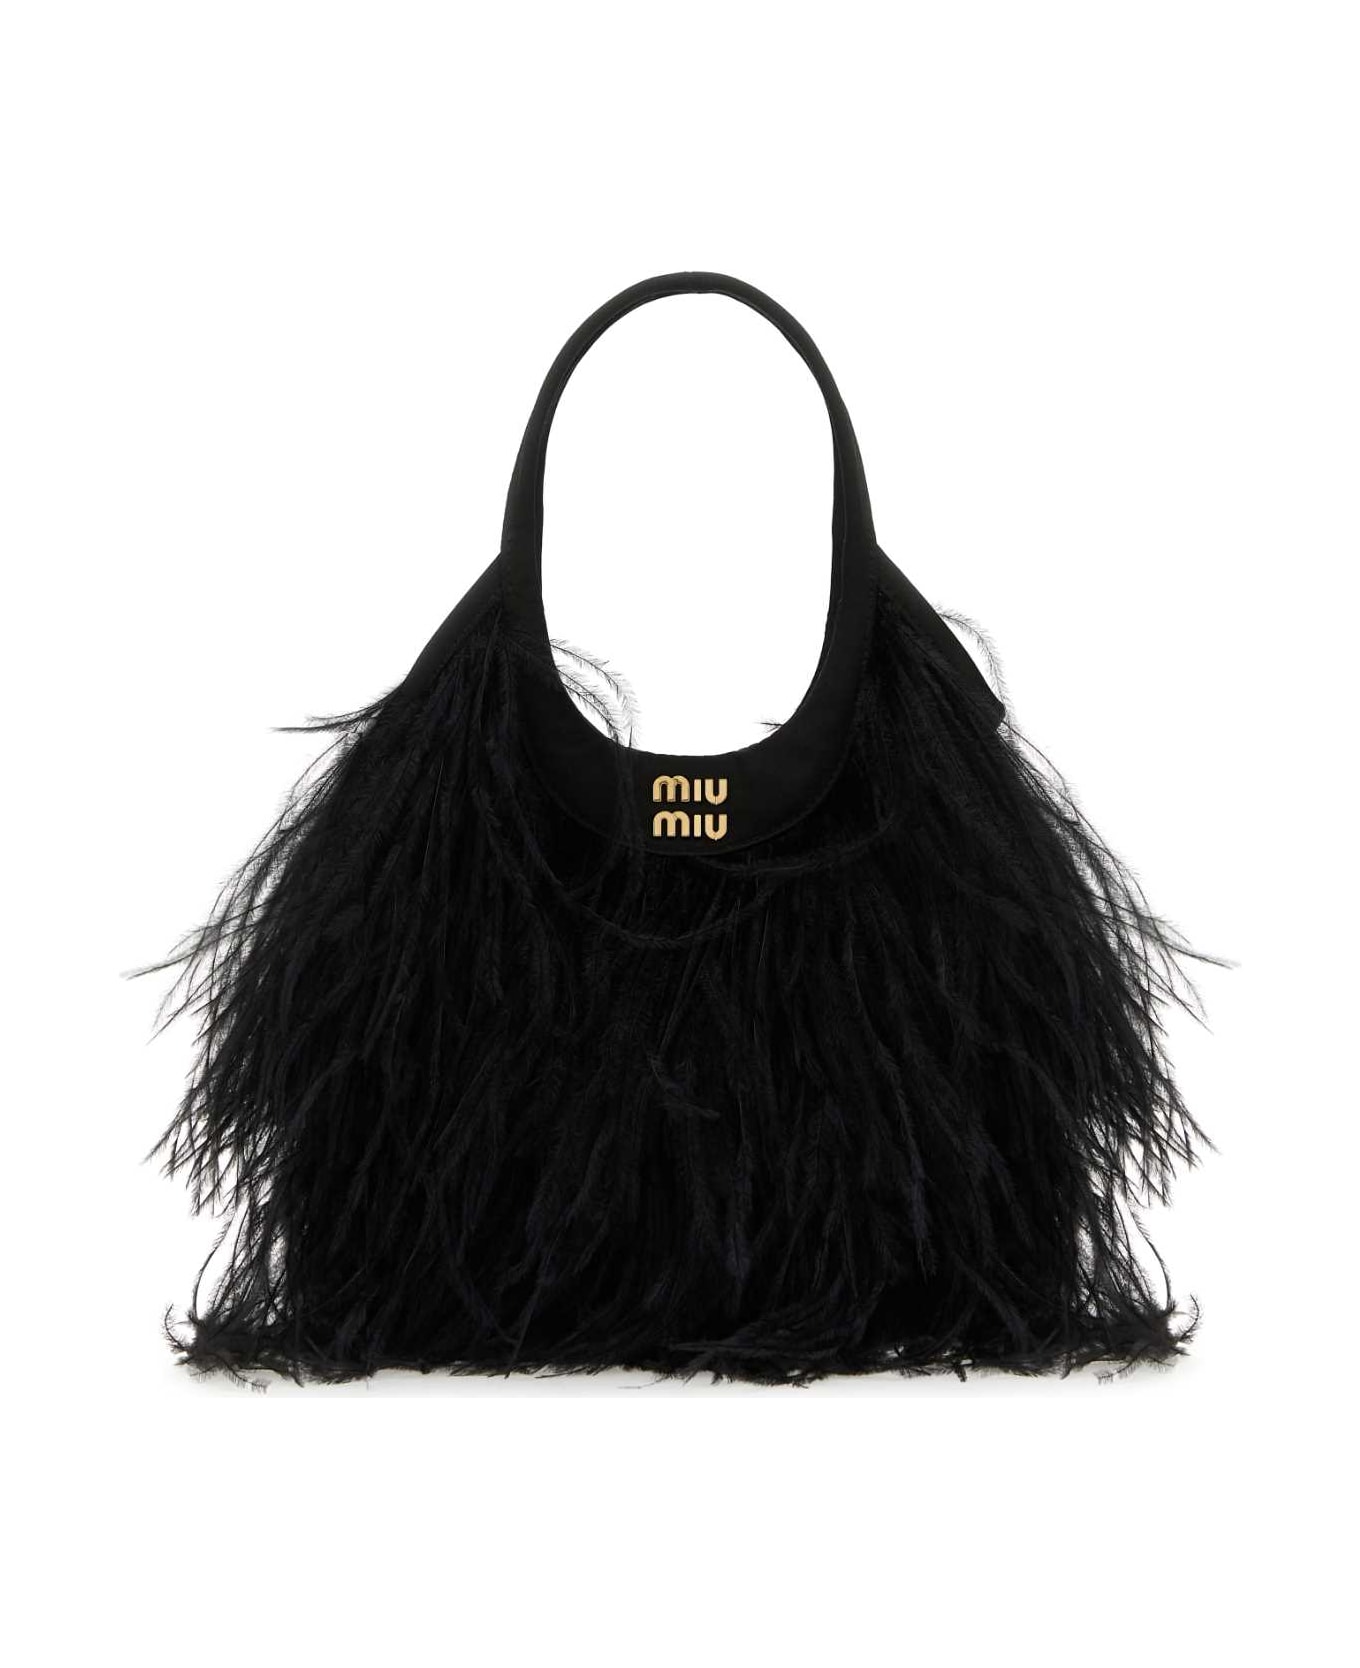 Miu Miu Embellished Satin Handbag - NERO